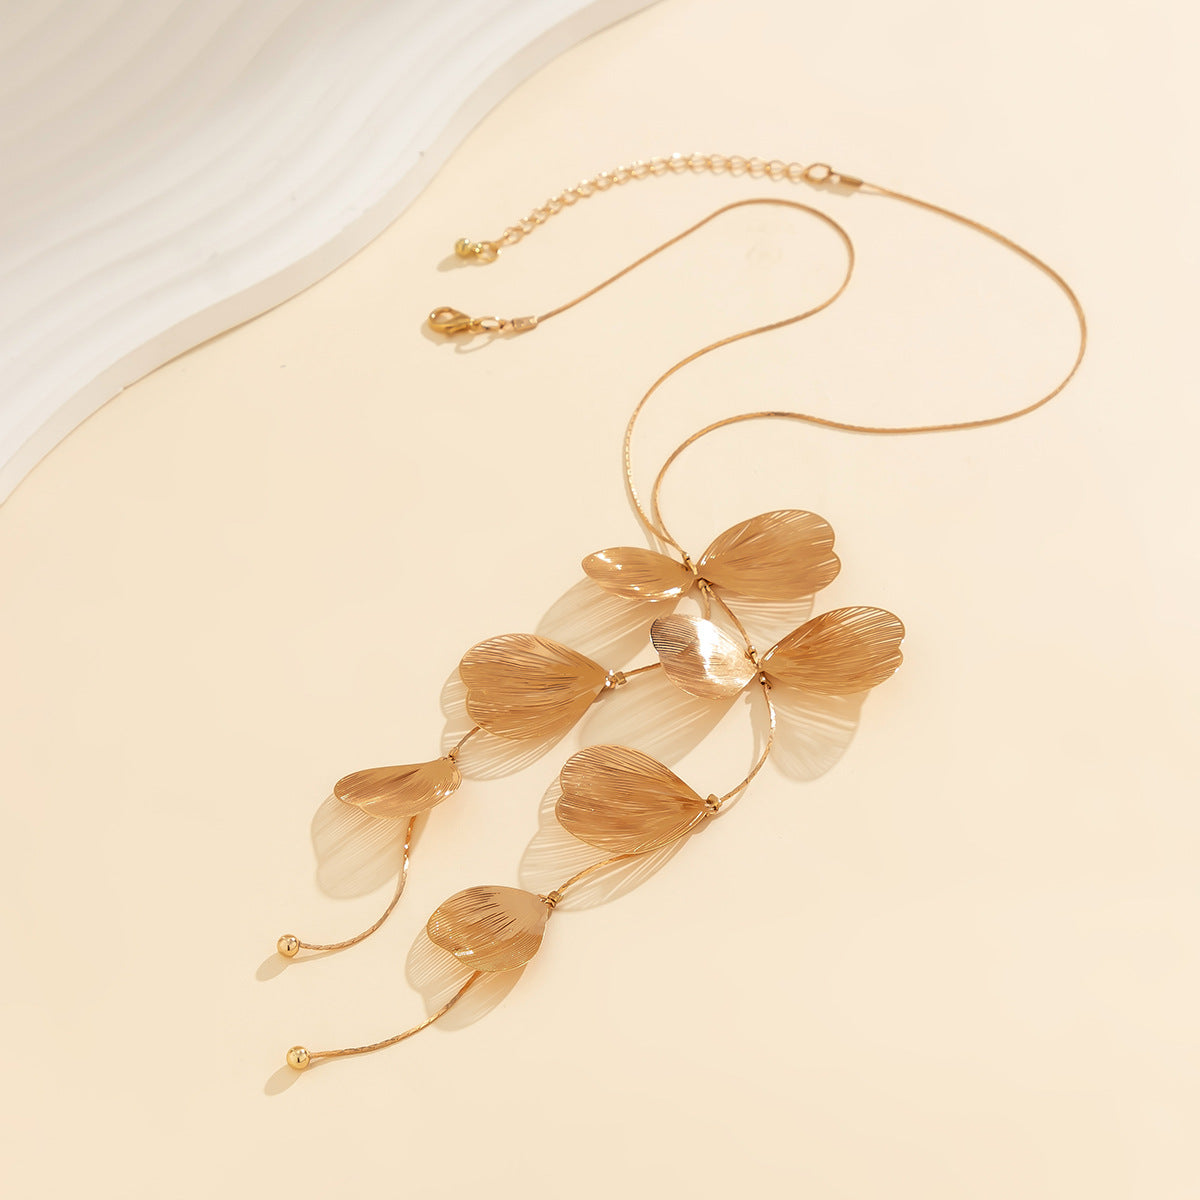 Ginkgo Biloba Gold Chain Necklace with Metal Design - European Style Statement Piece for Women